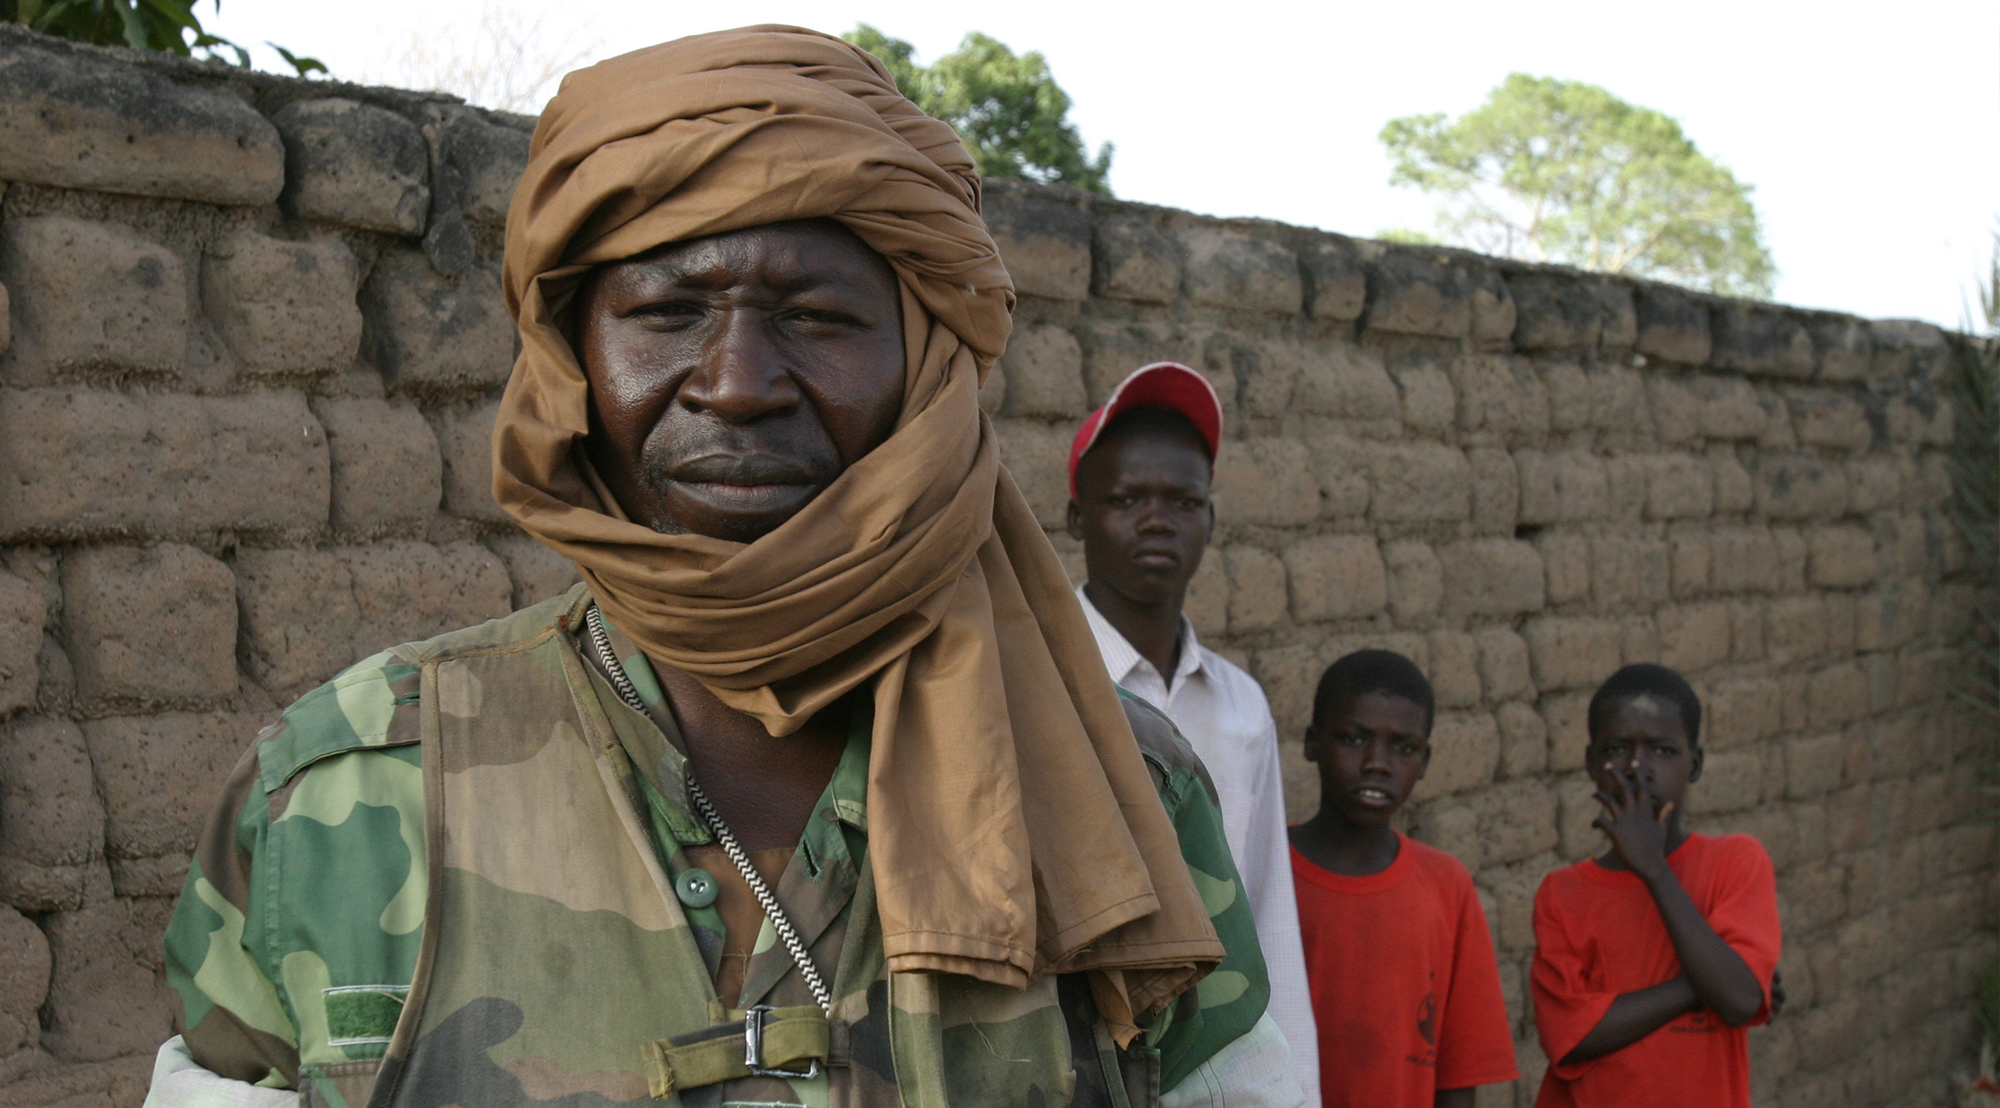 Die Zentralafrikanische Republik - kein religiöser Konflikt